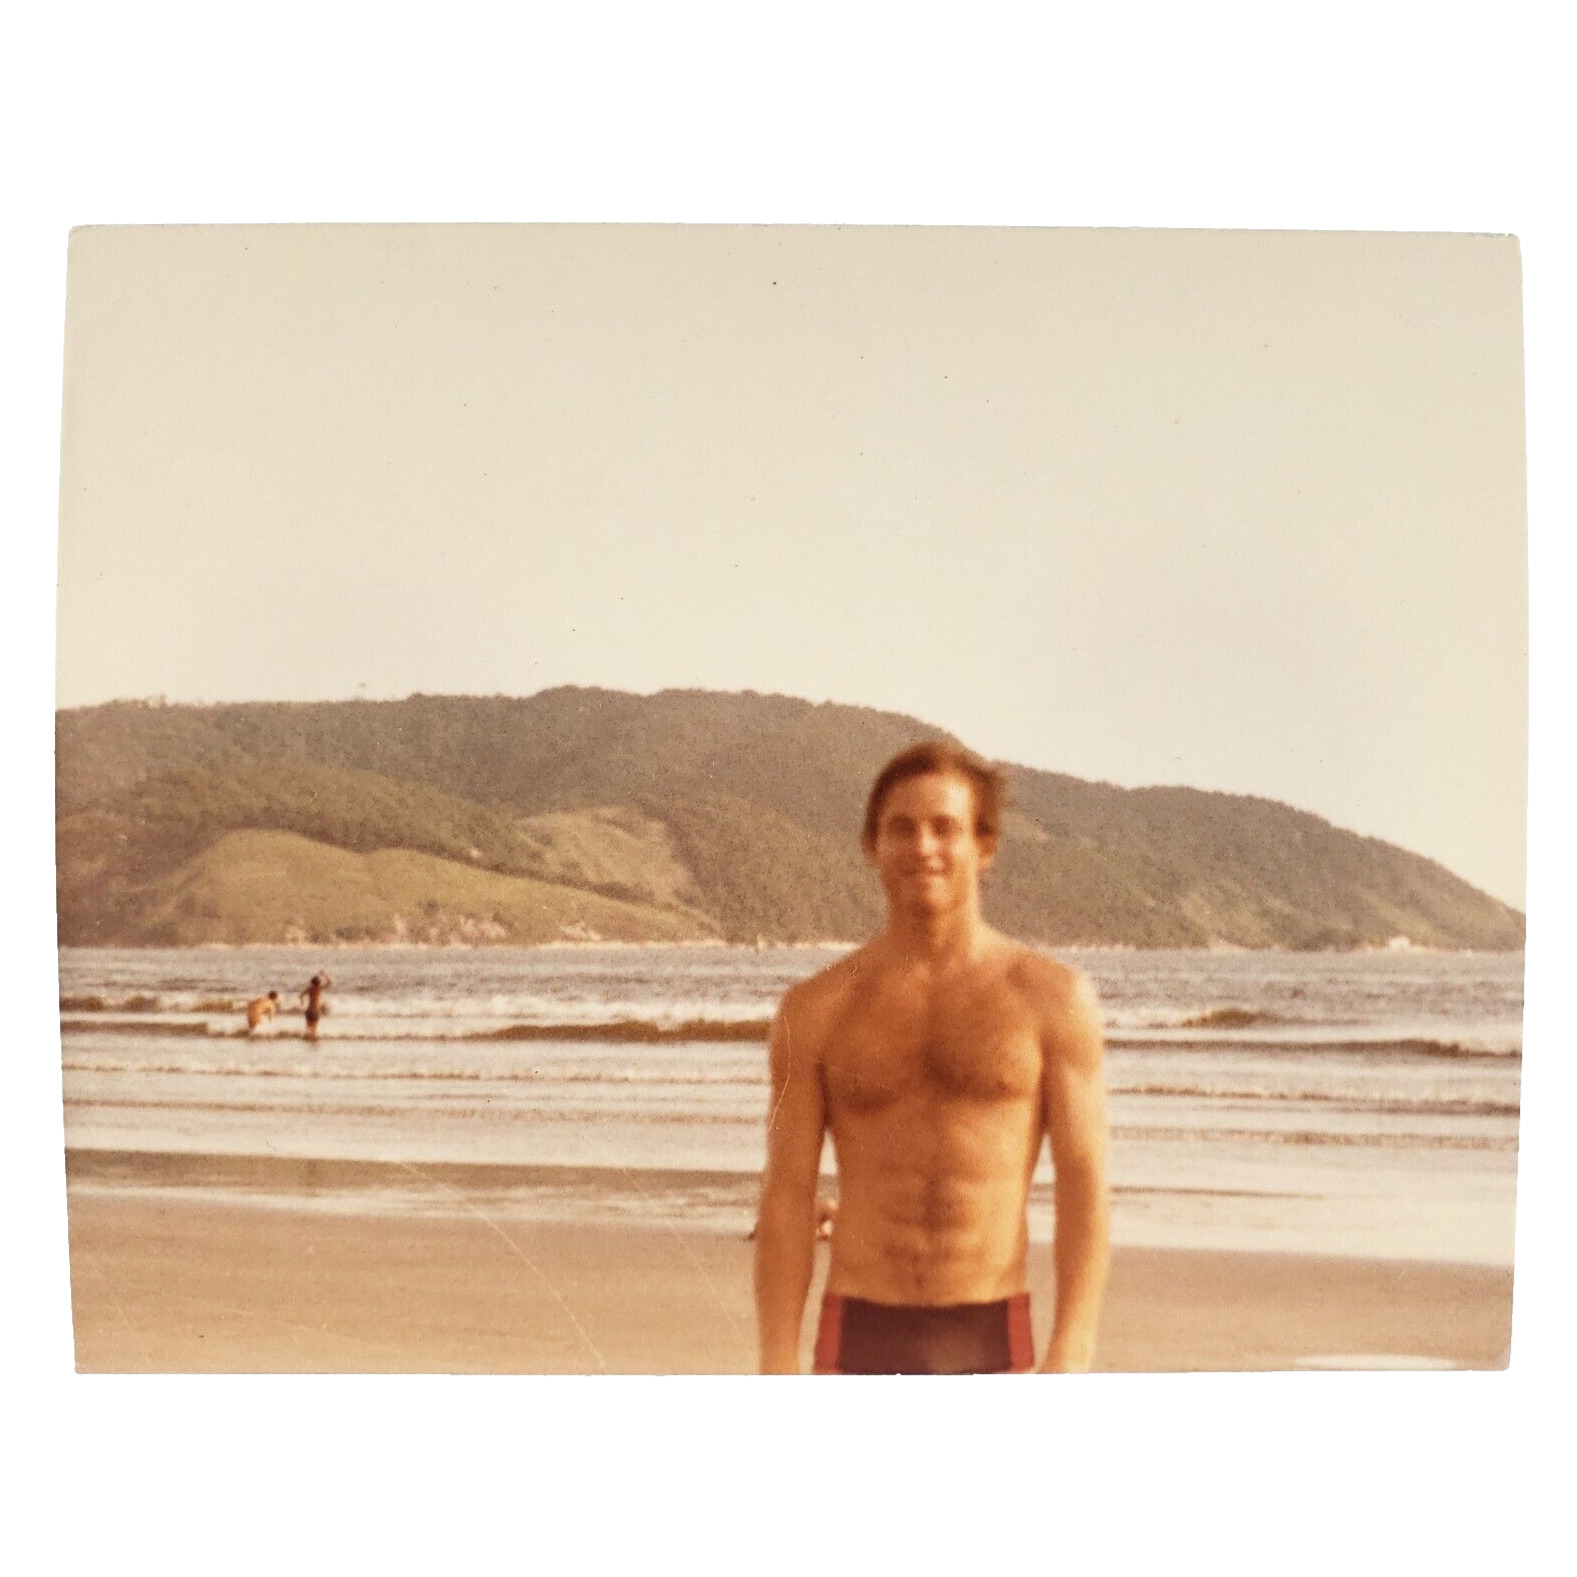 Blurred Shirtless Beefcake at Beach Photo 1980s Jumping in Waves Snapshot B3383